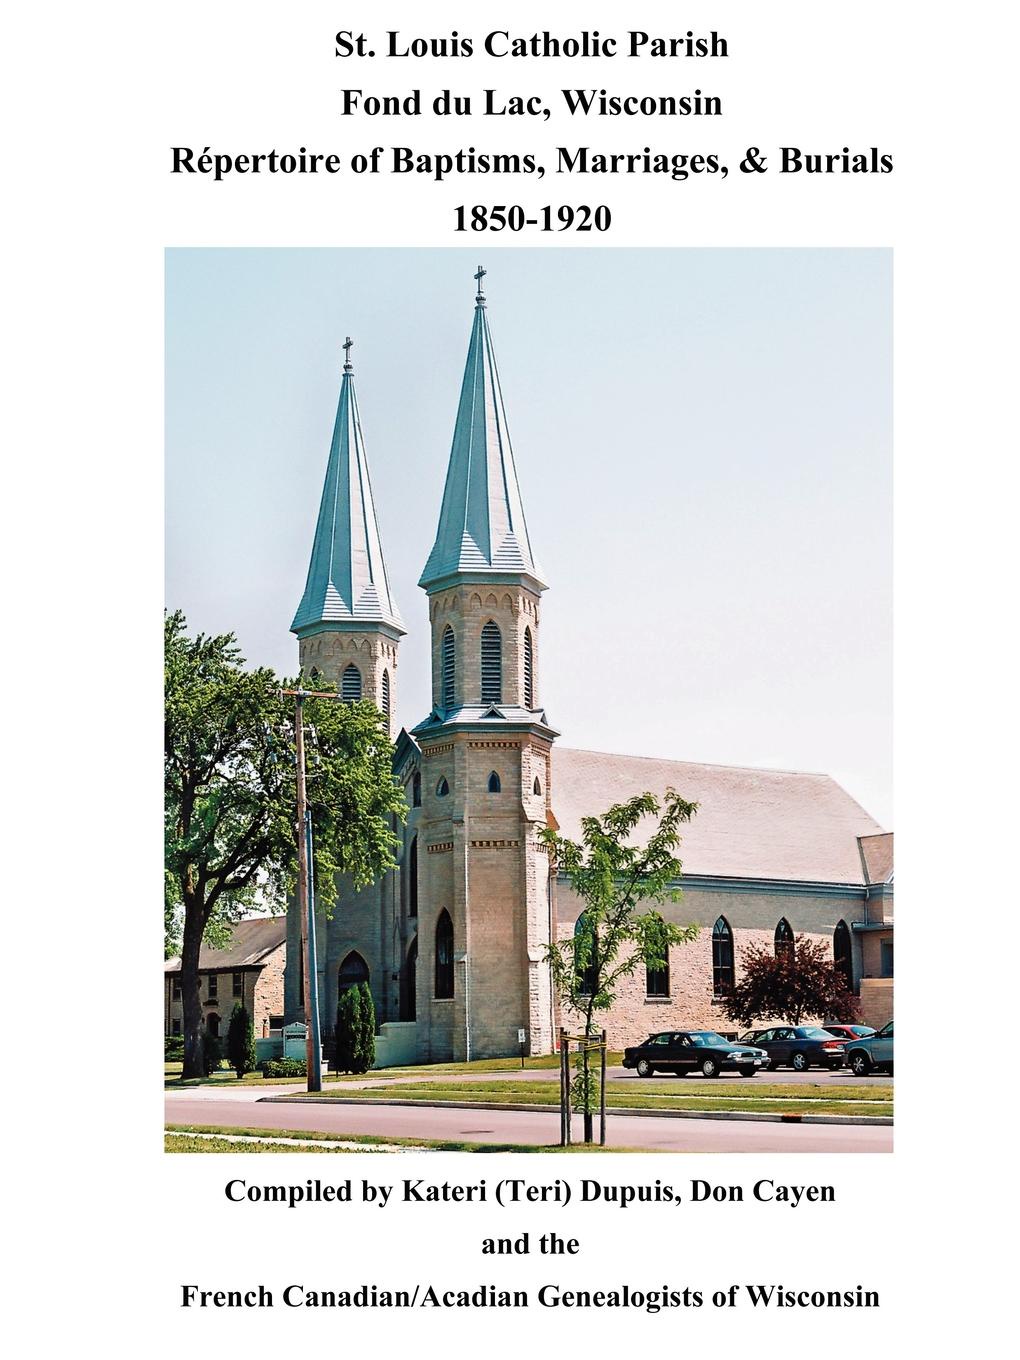 St. Louis Catholic Parish, Fond Du Lac, Wisconsin. Repertoire of Baptisms, Marriages & Burials, 1850-1920